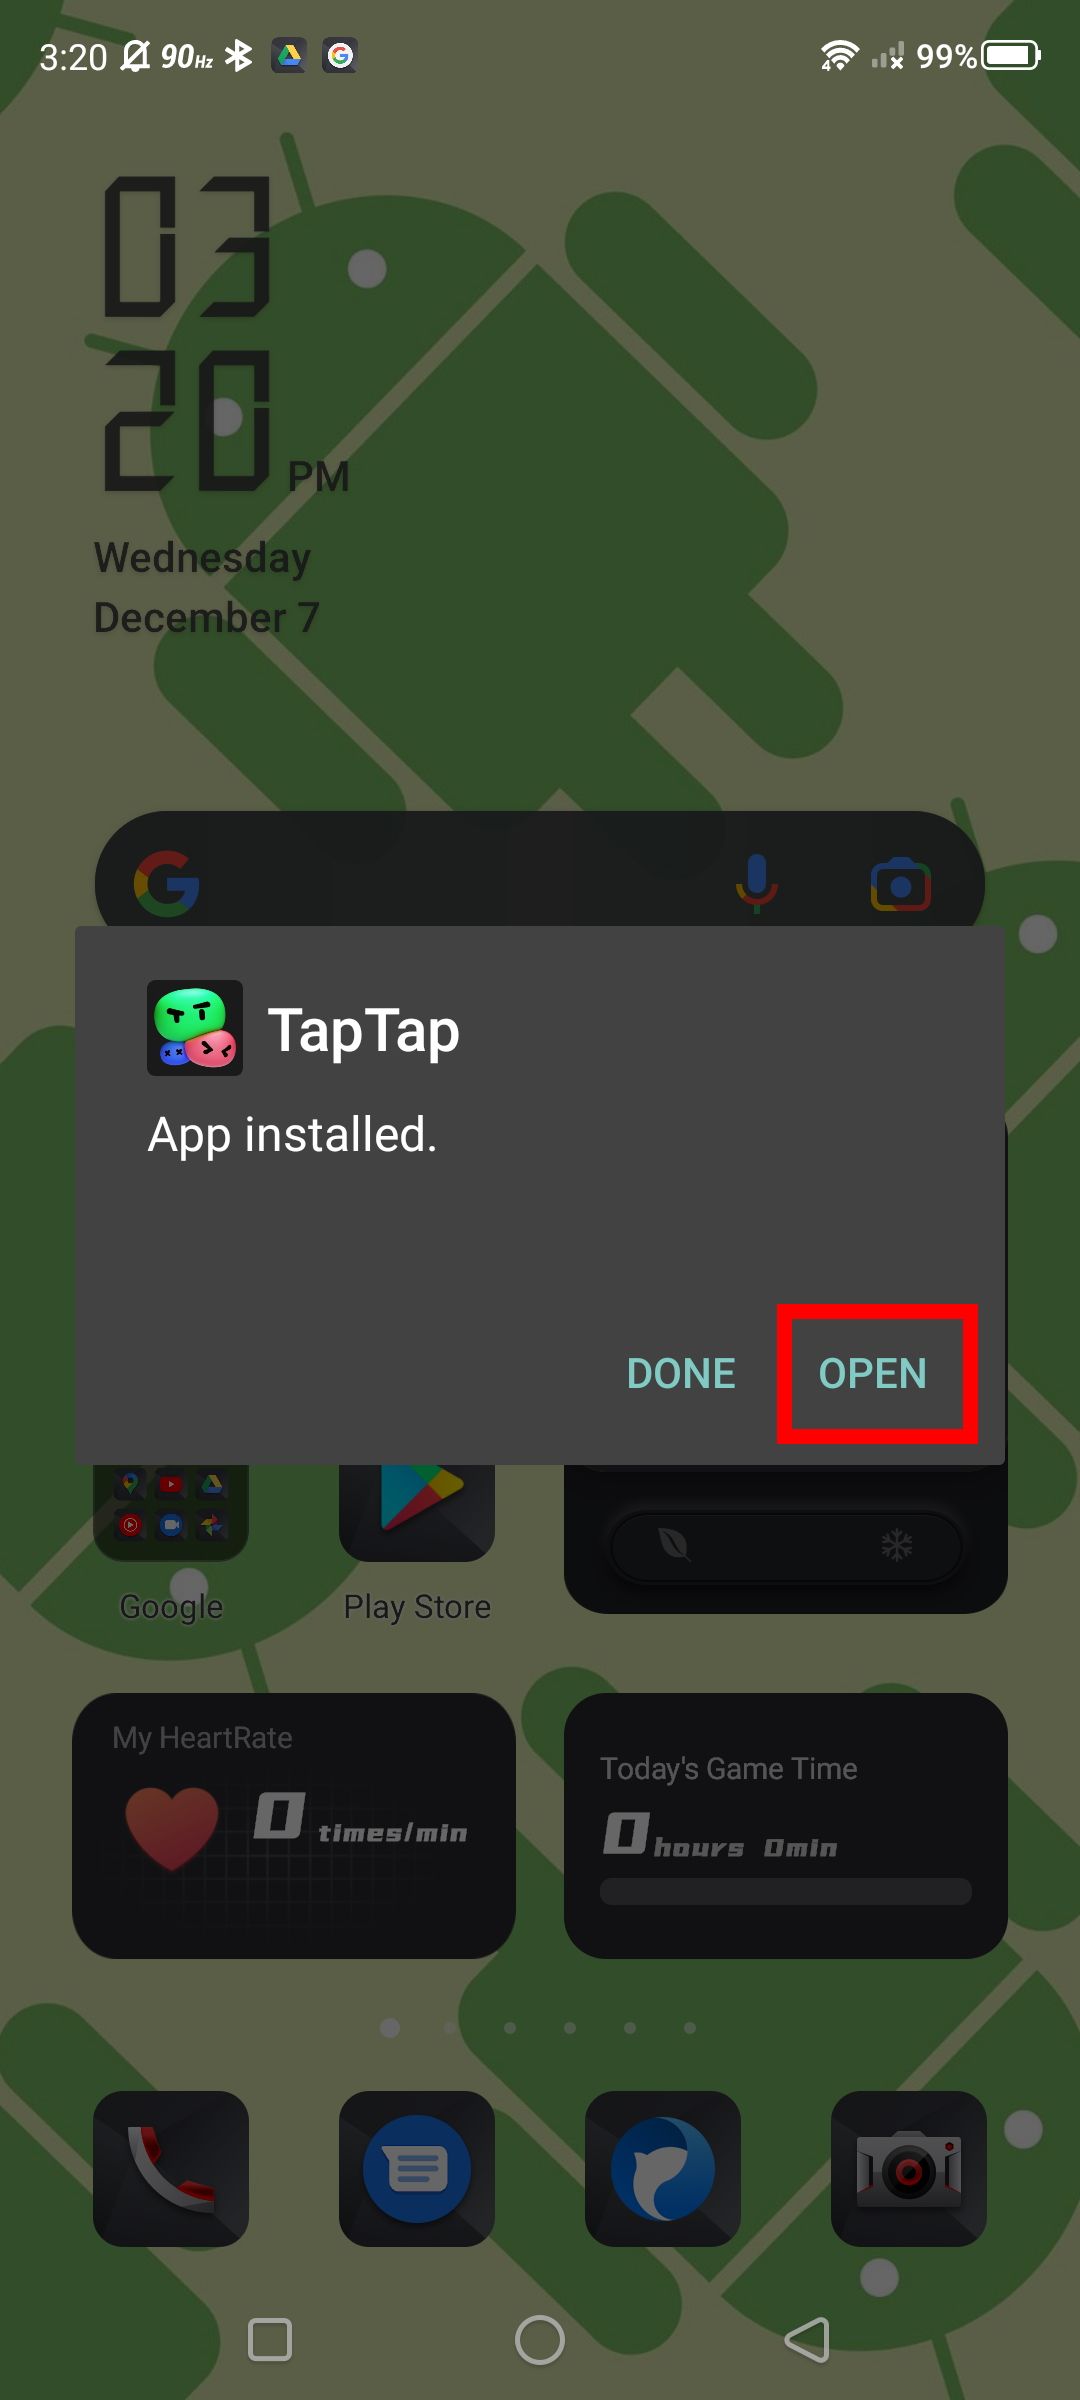 Captura de tela da abertura do TapTap no seu dispositivo Android